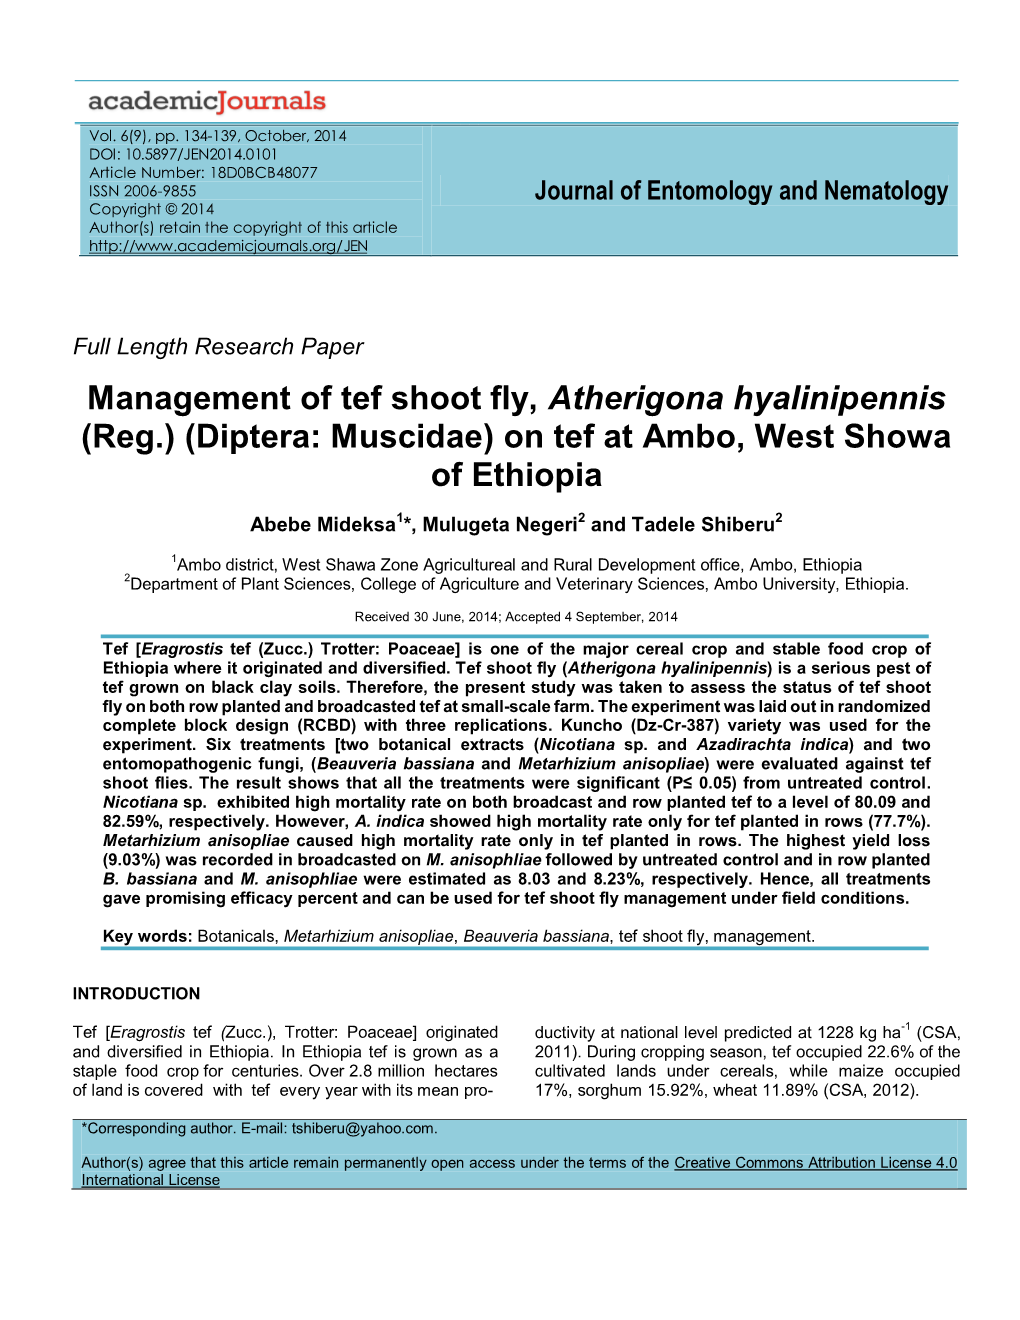 Management of Tef Shoot Fly, Atherigona Hyalinipennis (Reg.) (Diptera: Muscidae) on Tef at Ambo, West Showa of Ethiopia